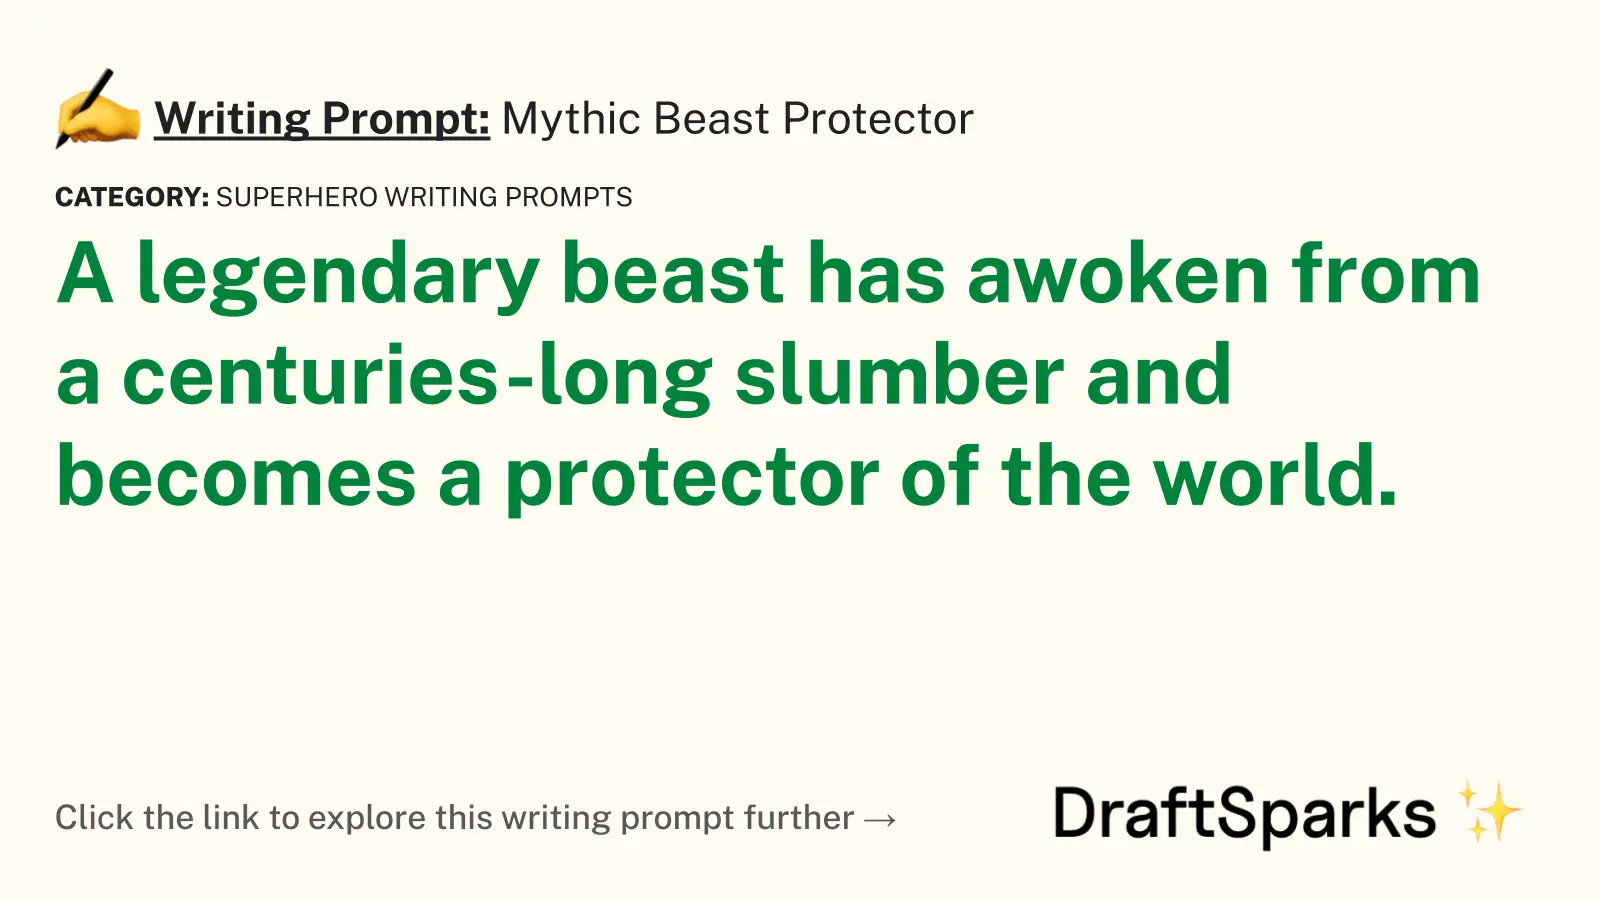 Mythic Beast Protector